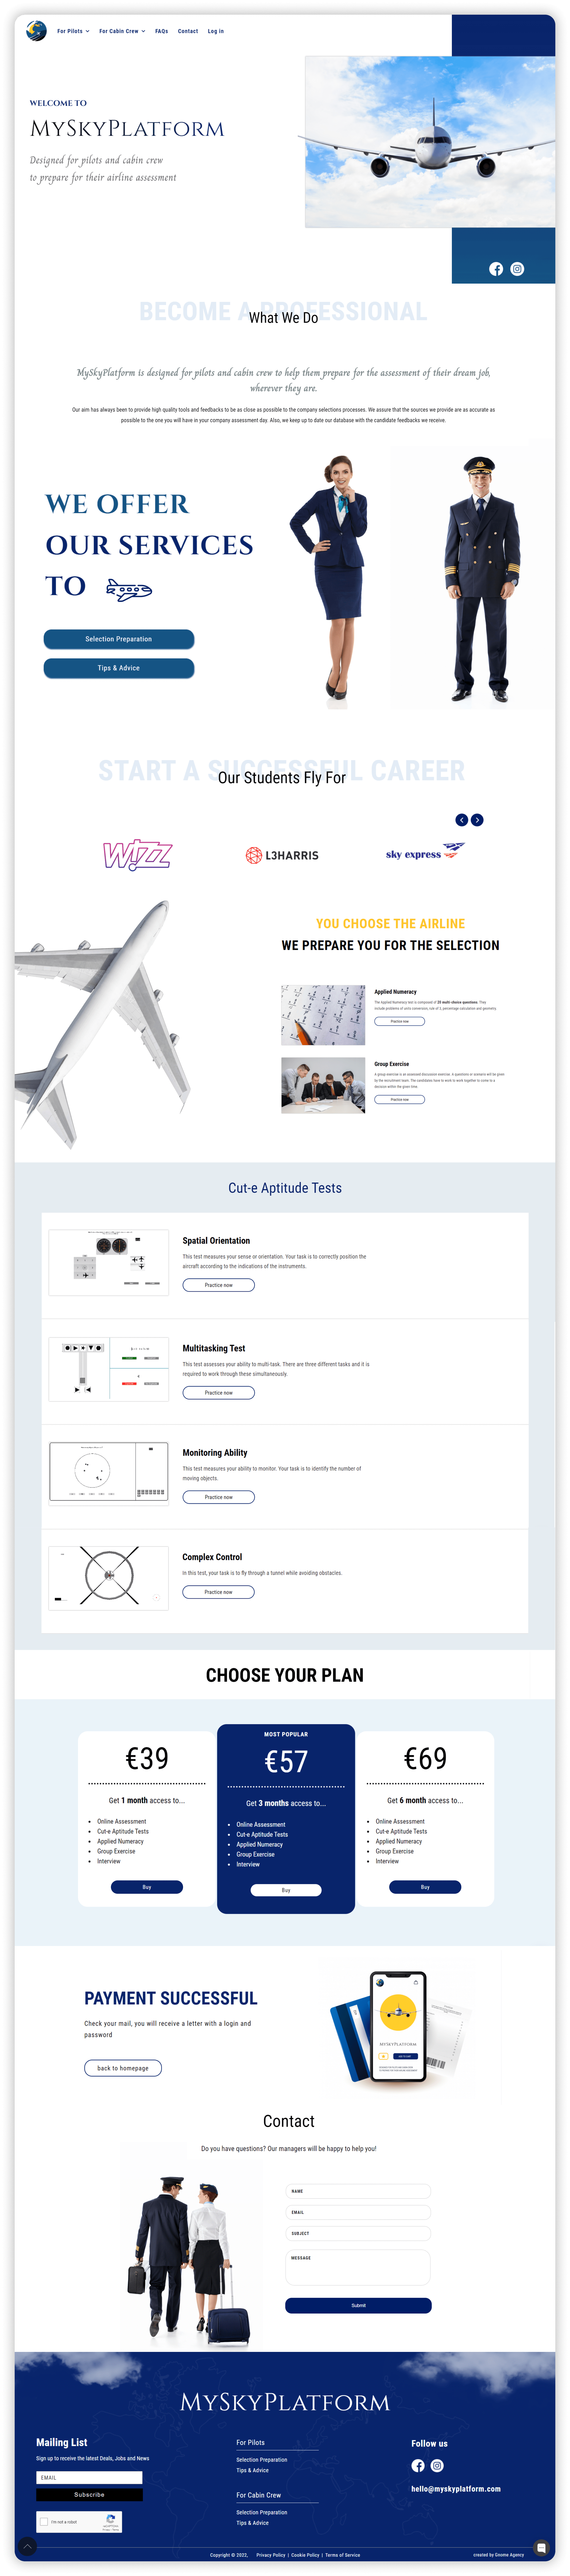 Education Platform Project - Gnome